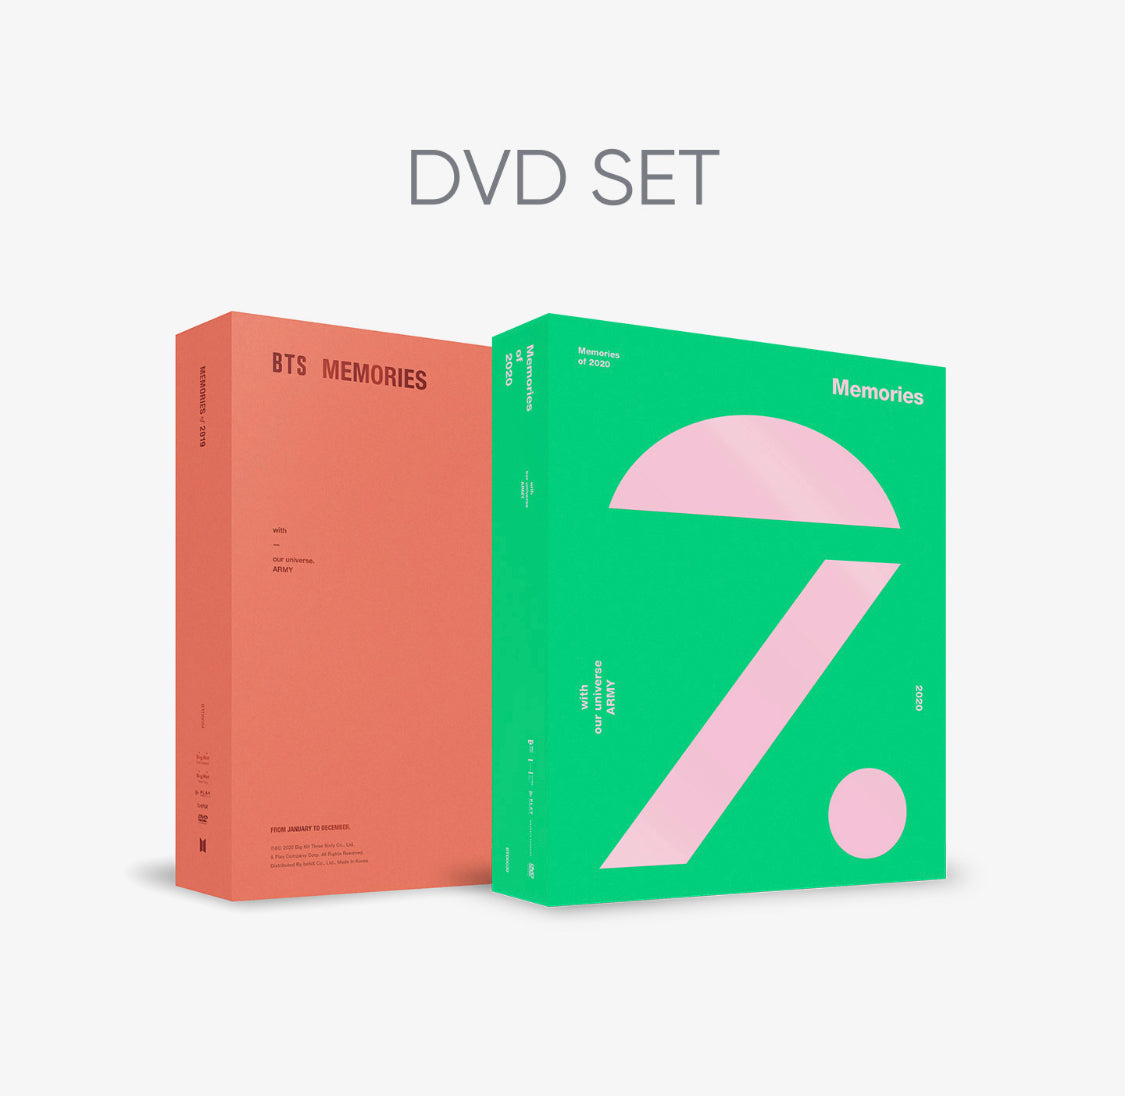 [PRE-ORDER] BTS Memories of 2019 - 2020 DVD Set